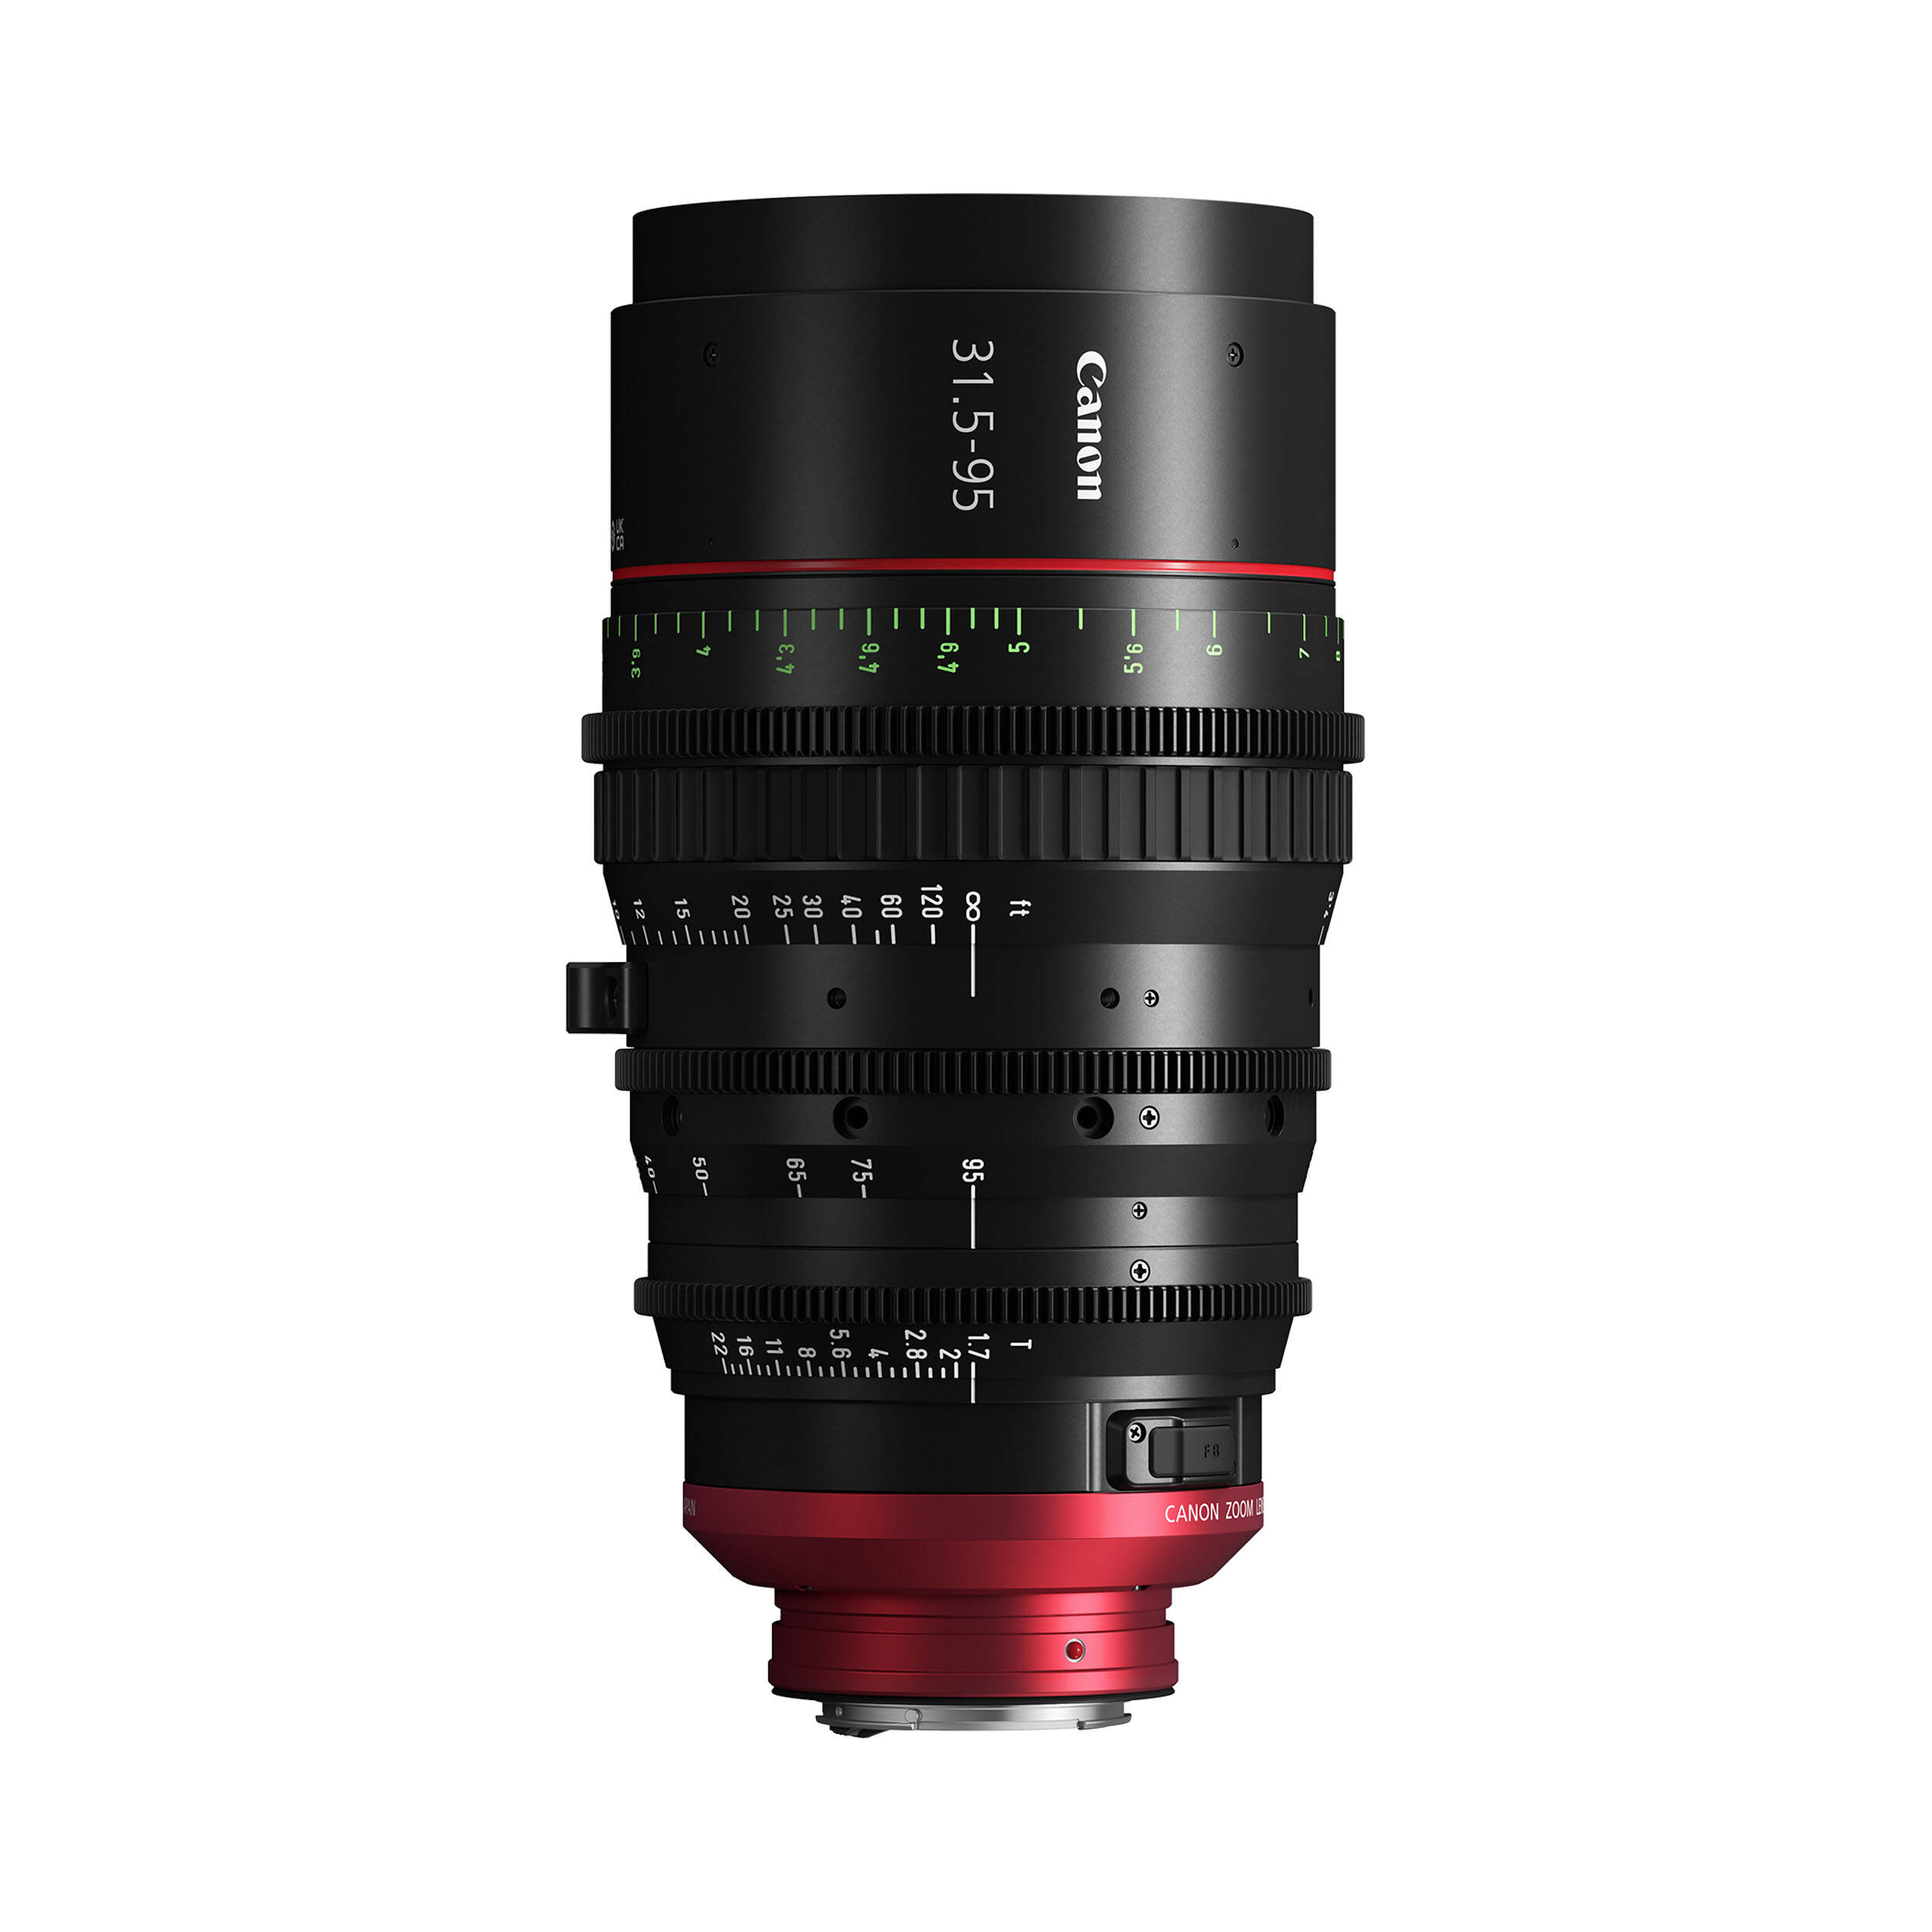 Canon CN-E Flex Zoom 31.5-95mm T1.7 Lens Super35 Cinema EOS Lens (EF Mount)